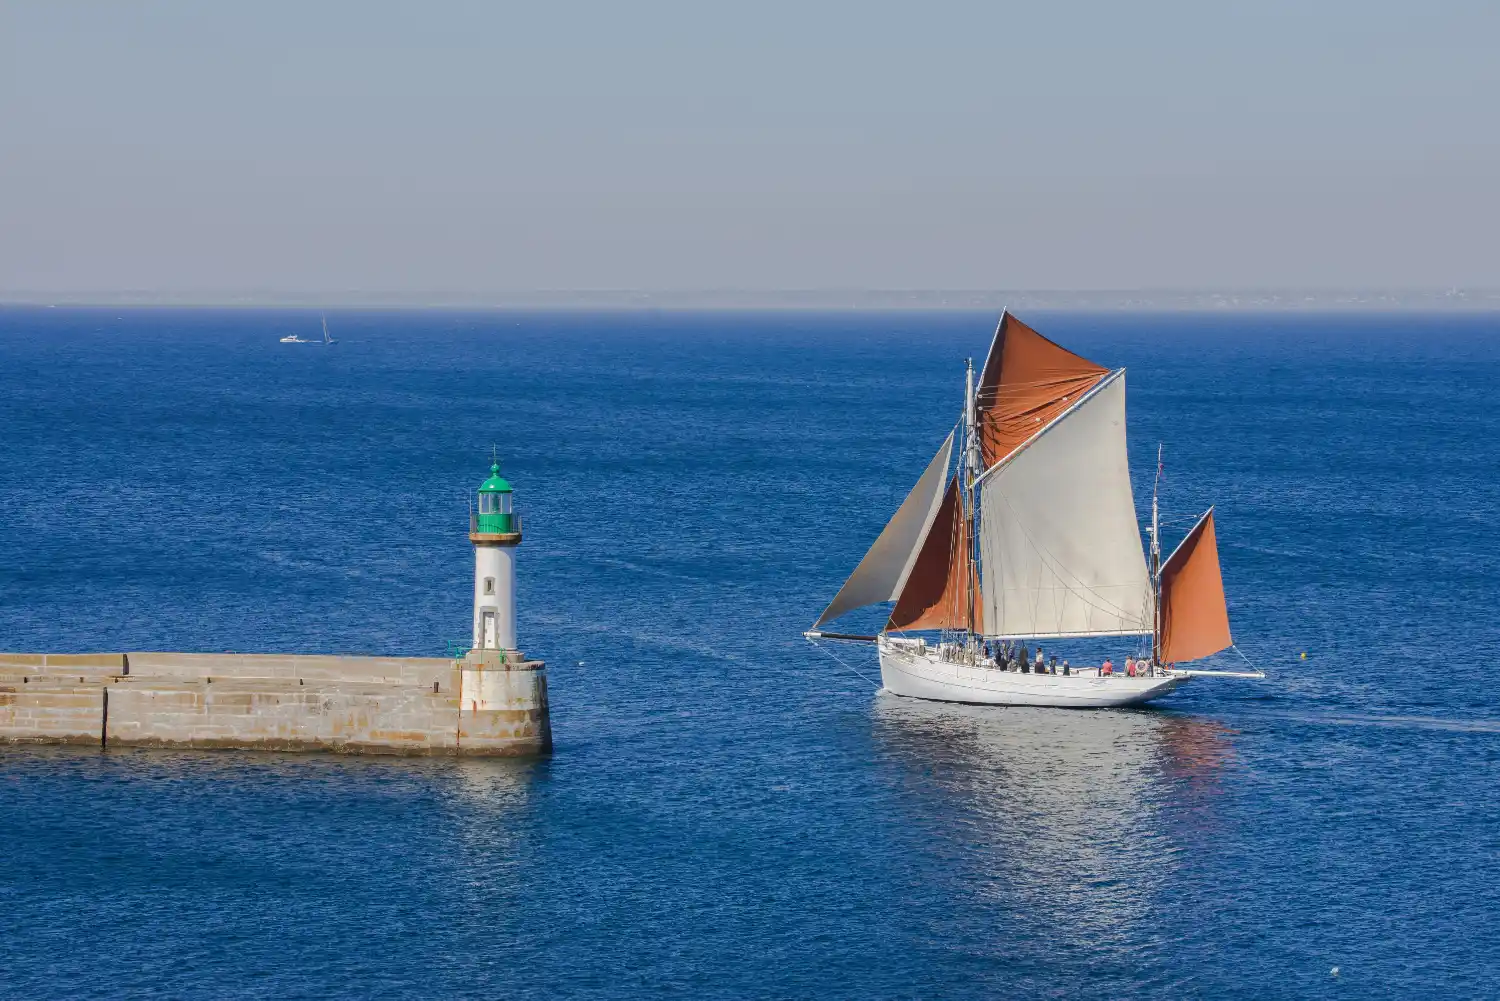 acheter en bord de mer en Bretagne paimpol voilier